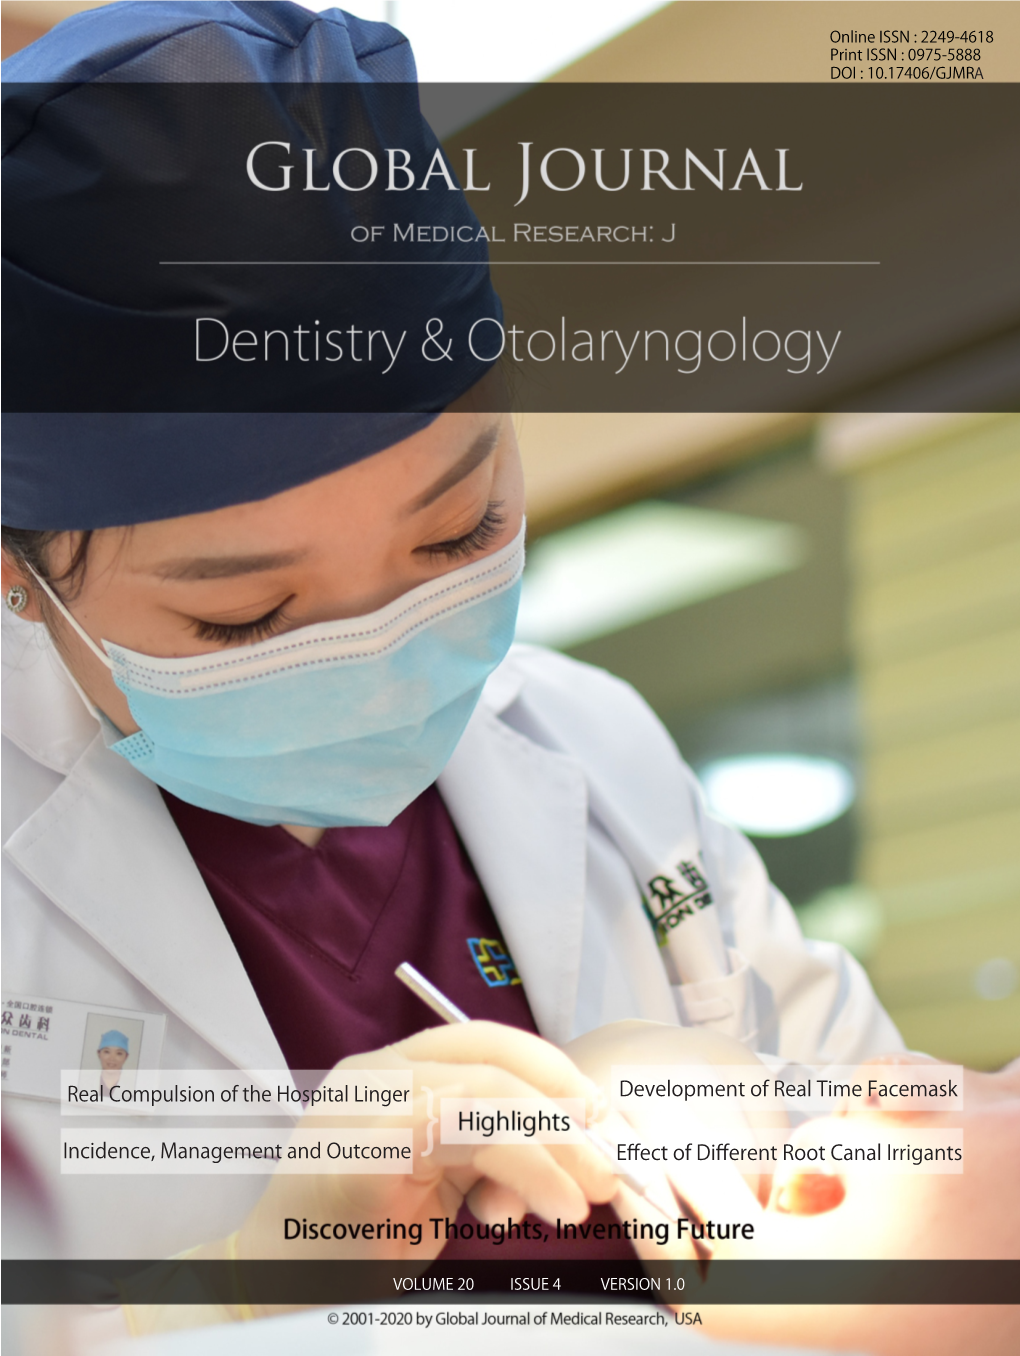 Global Journal of Medical Research: J Dentistry & Otolaryngology